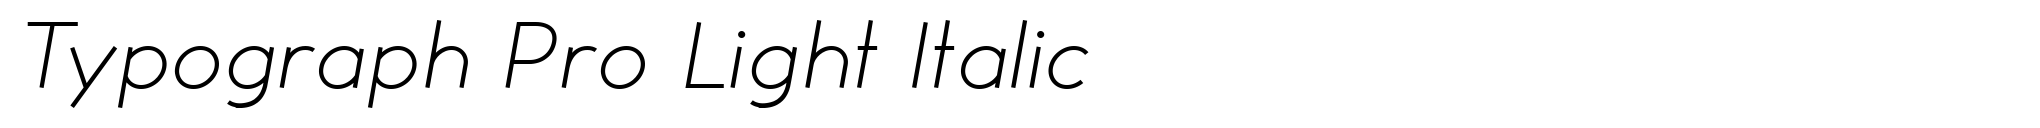 Typograph Pro Light Italic image